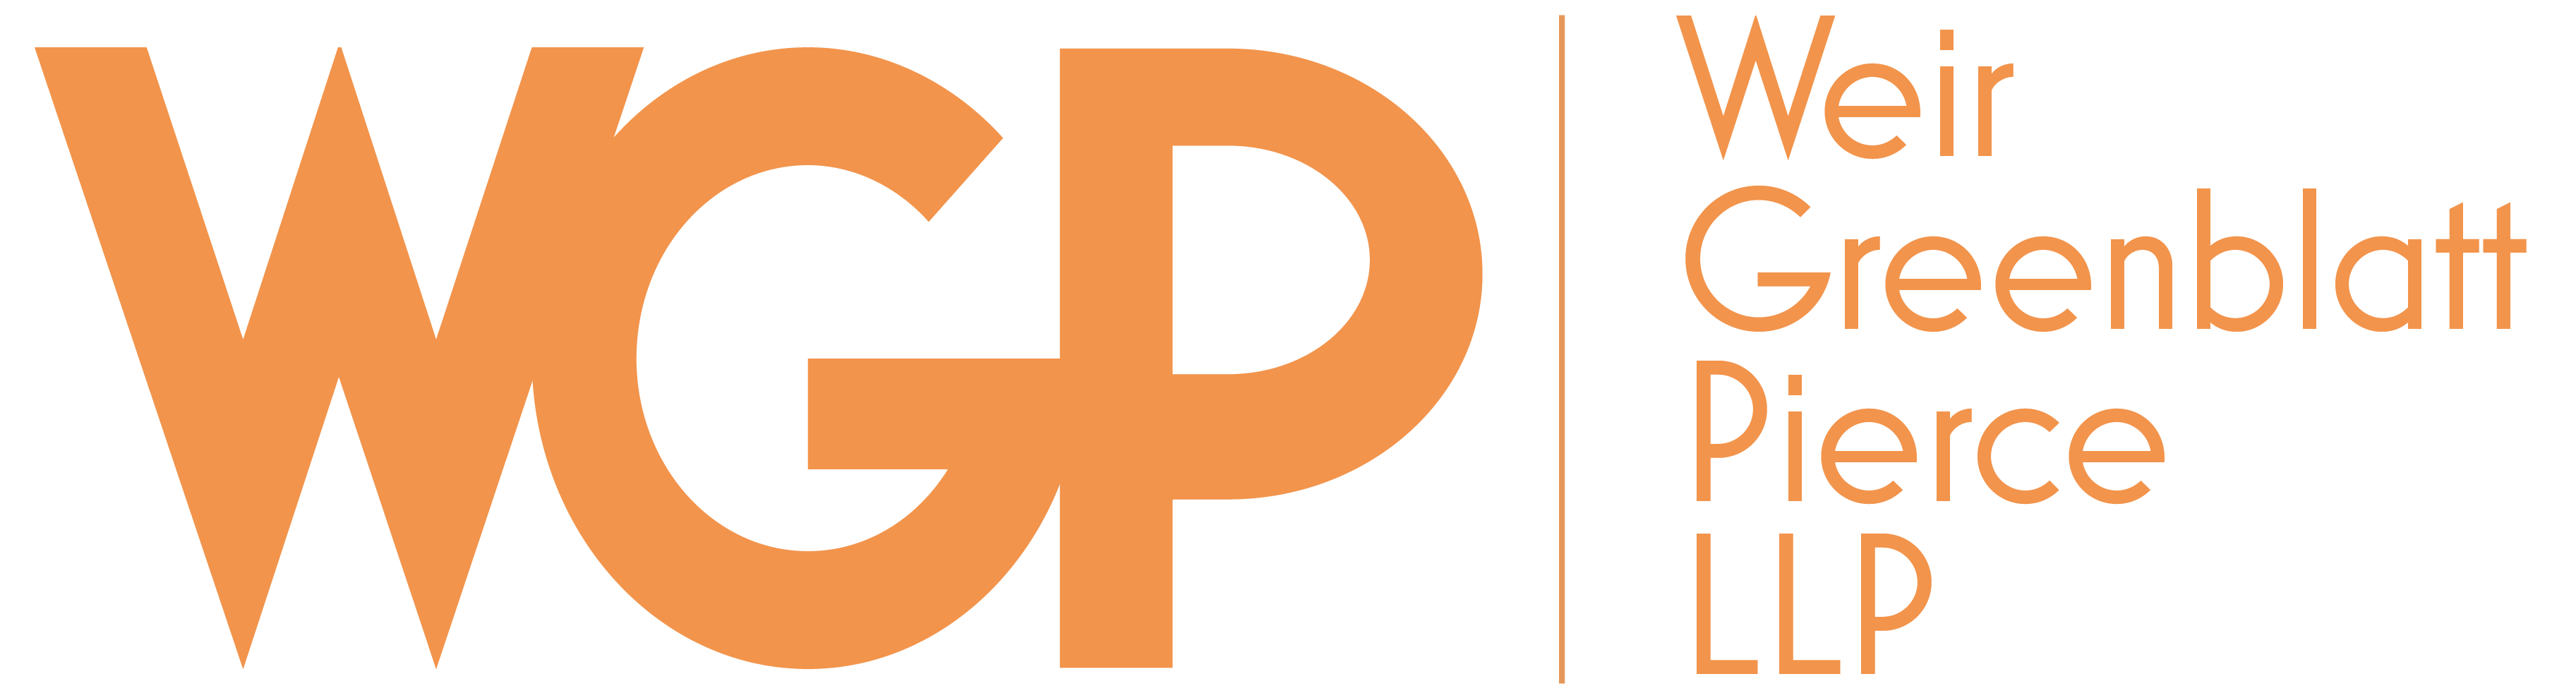 WGP logo Sub Page